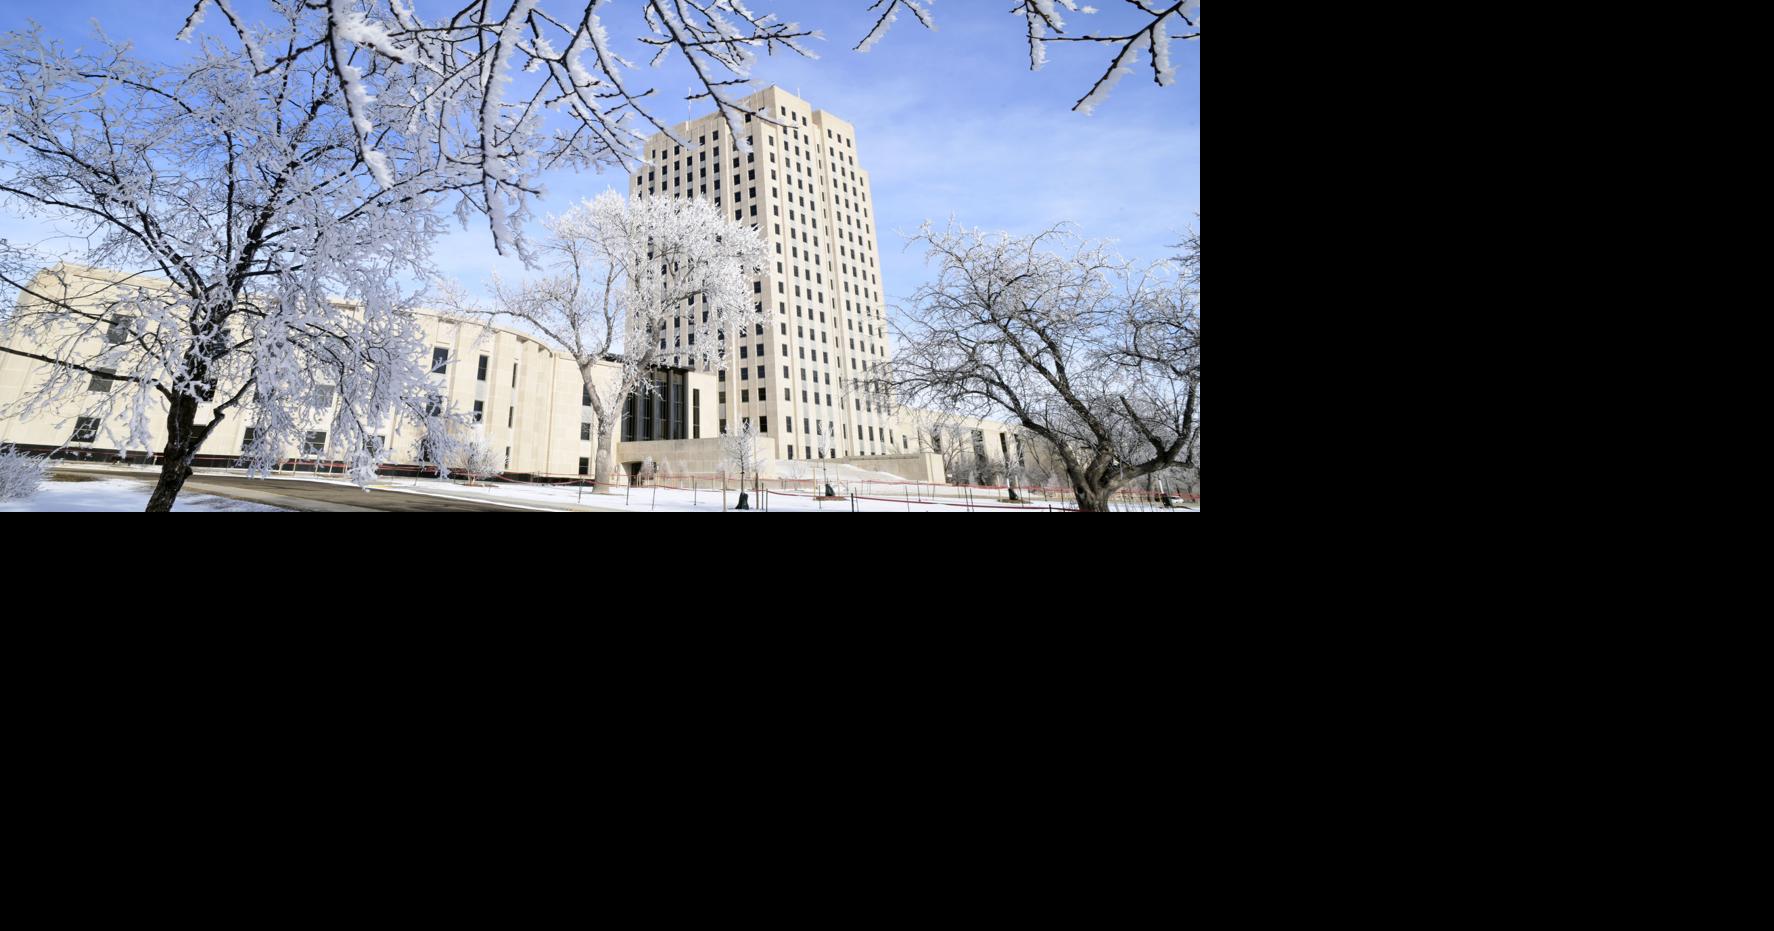 New majority leaders named to guide North Dakota legislative session